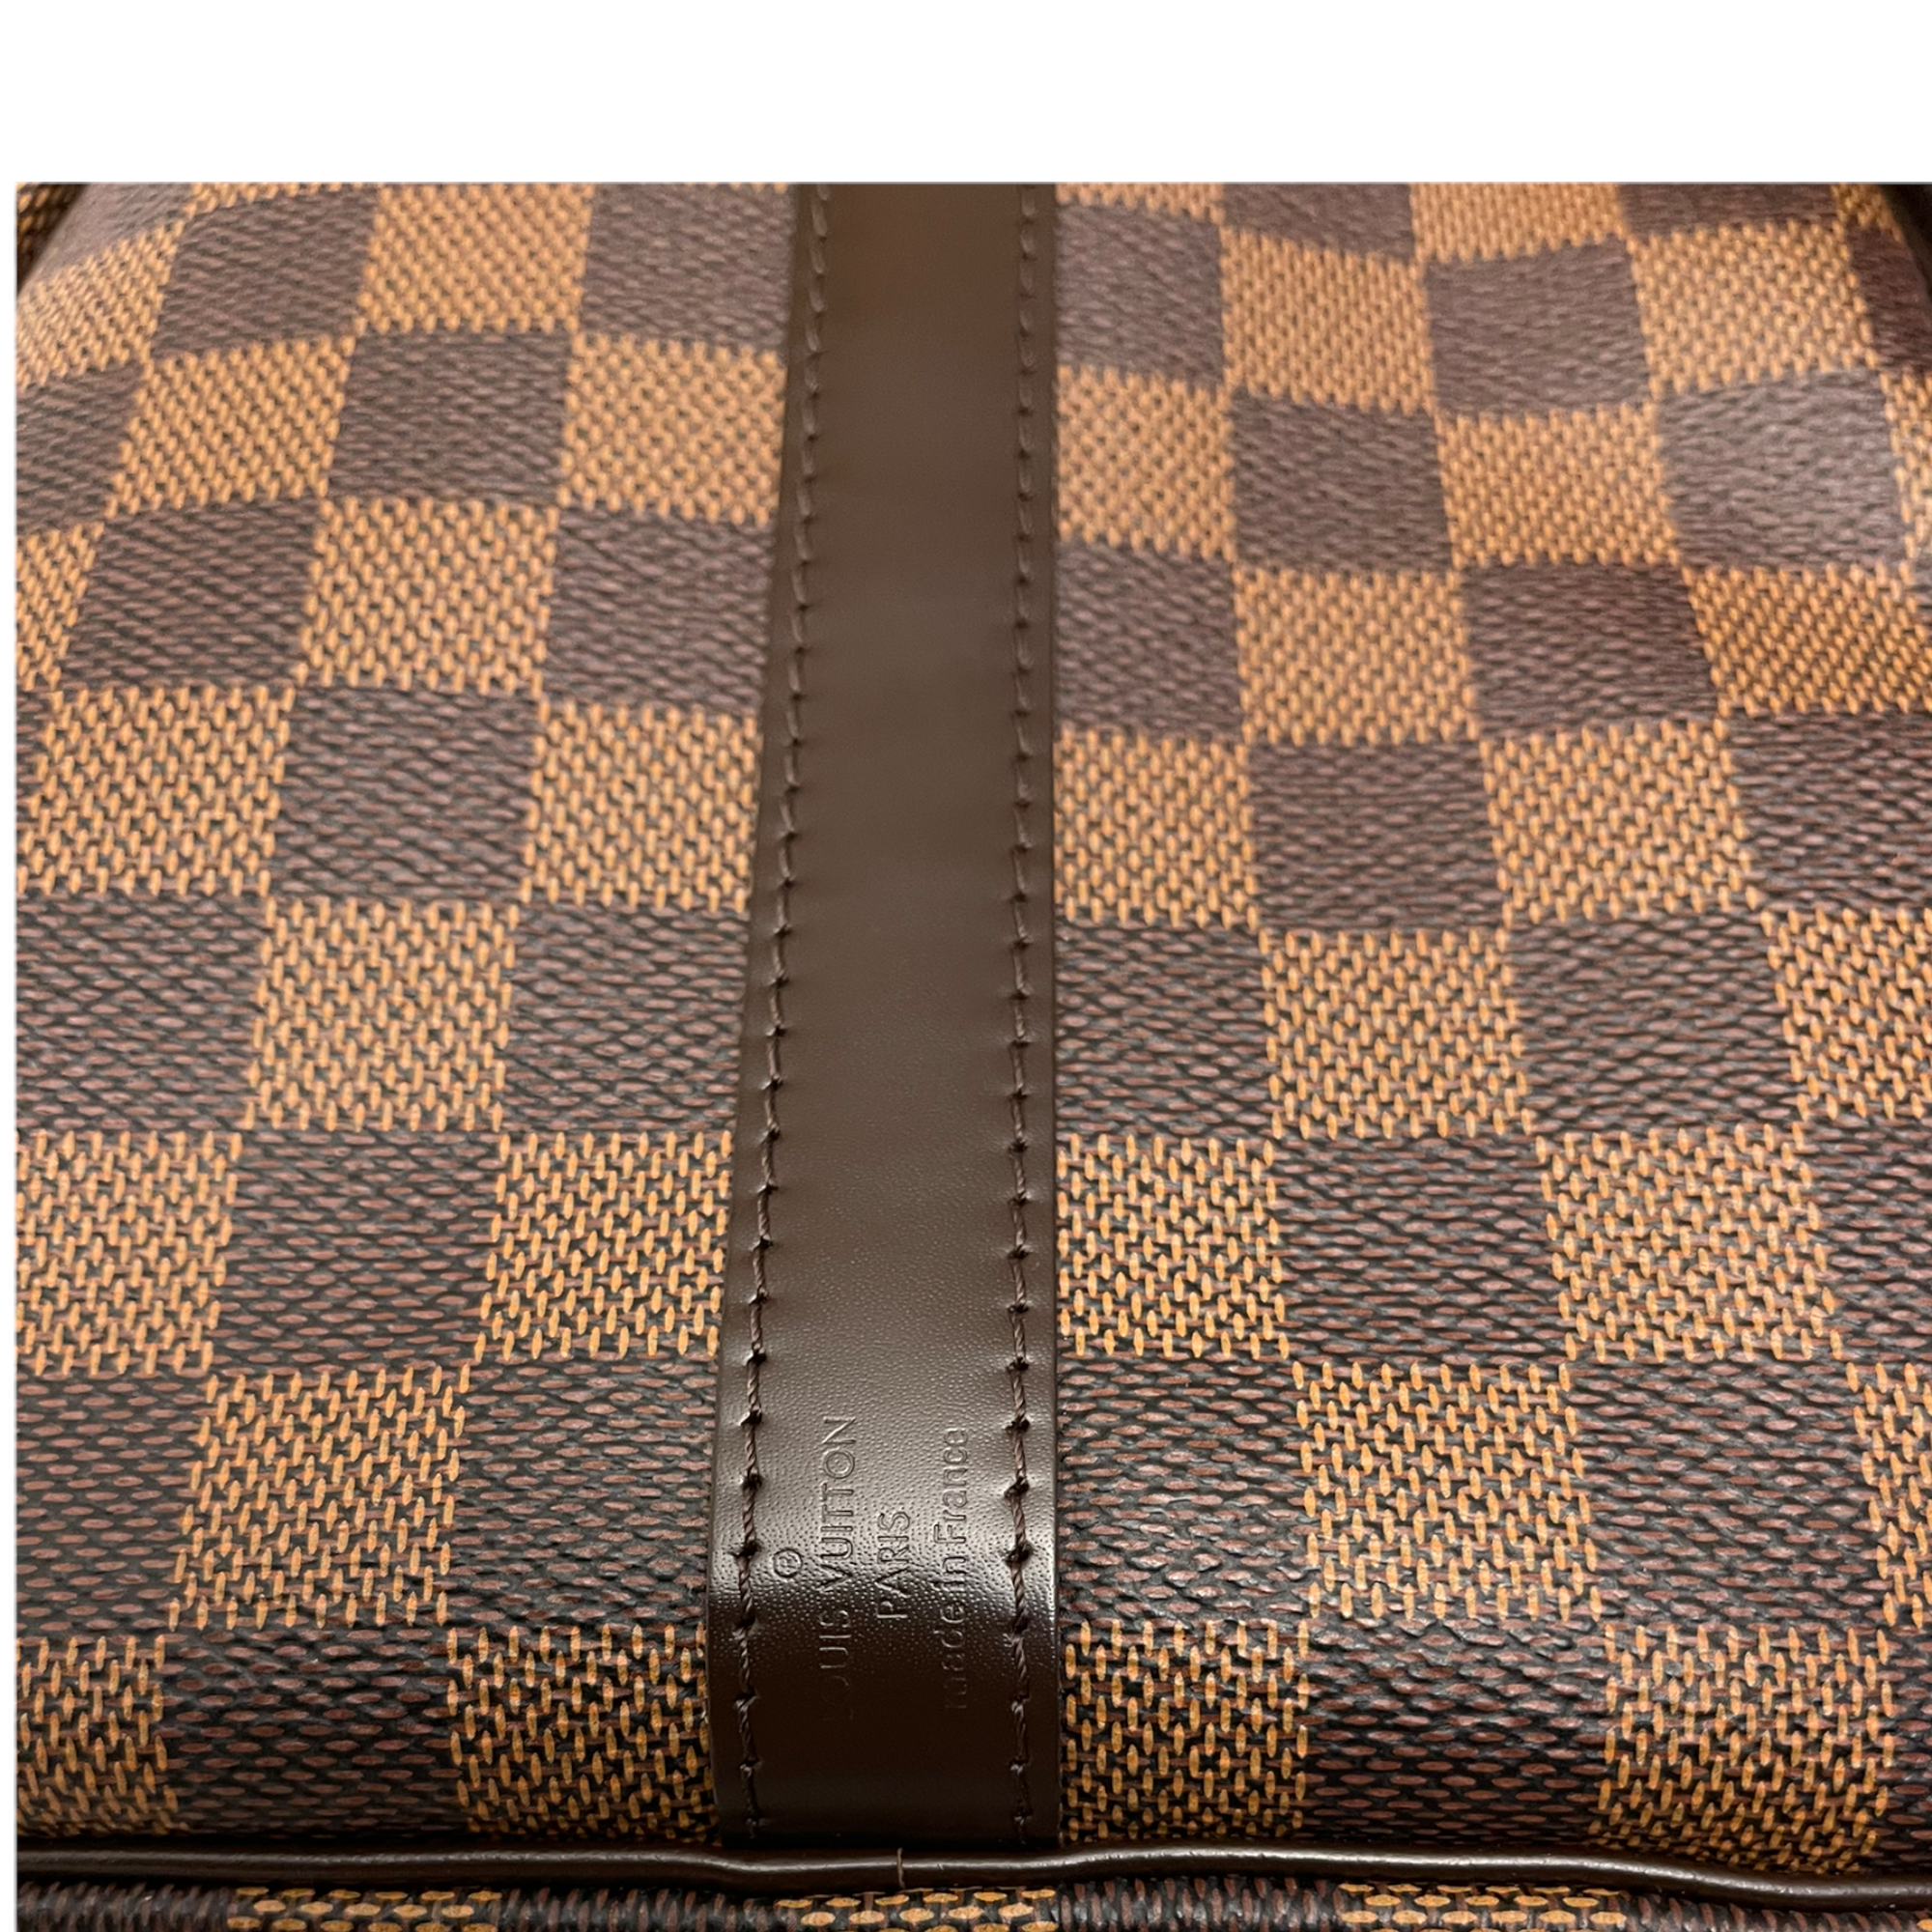 Louis Vuitton Speedy Bandouliere 30 Damier Ebene Bag